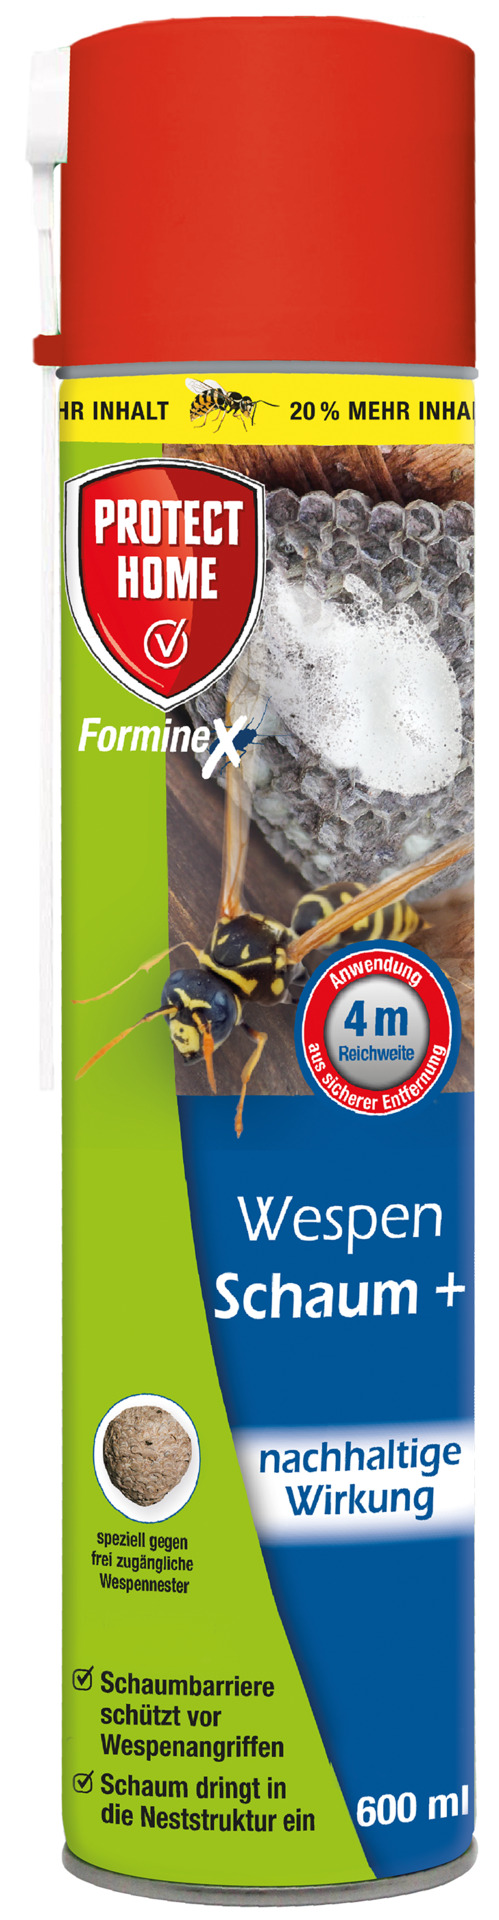 Protect Home Forminex Universal Insektenspray 600ml